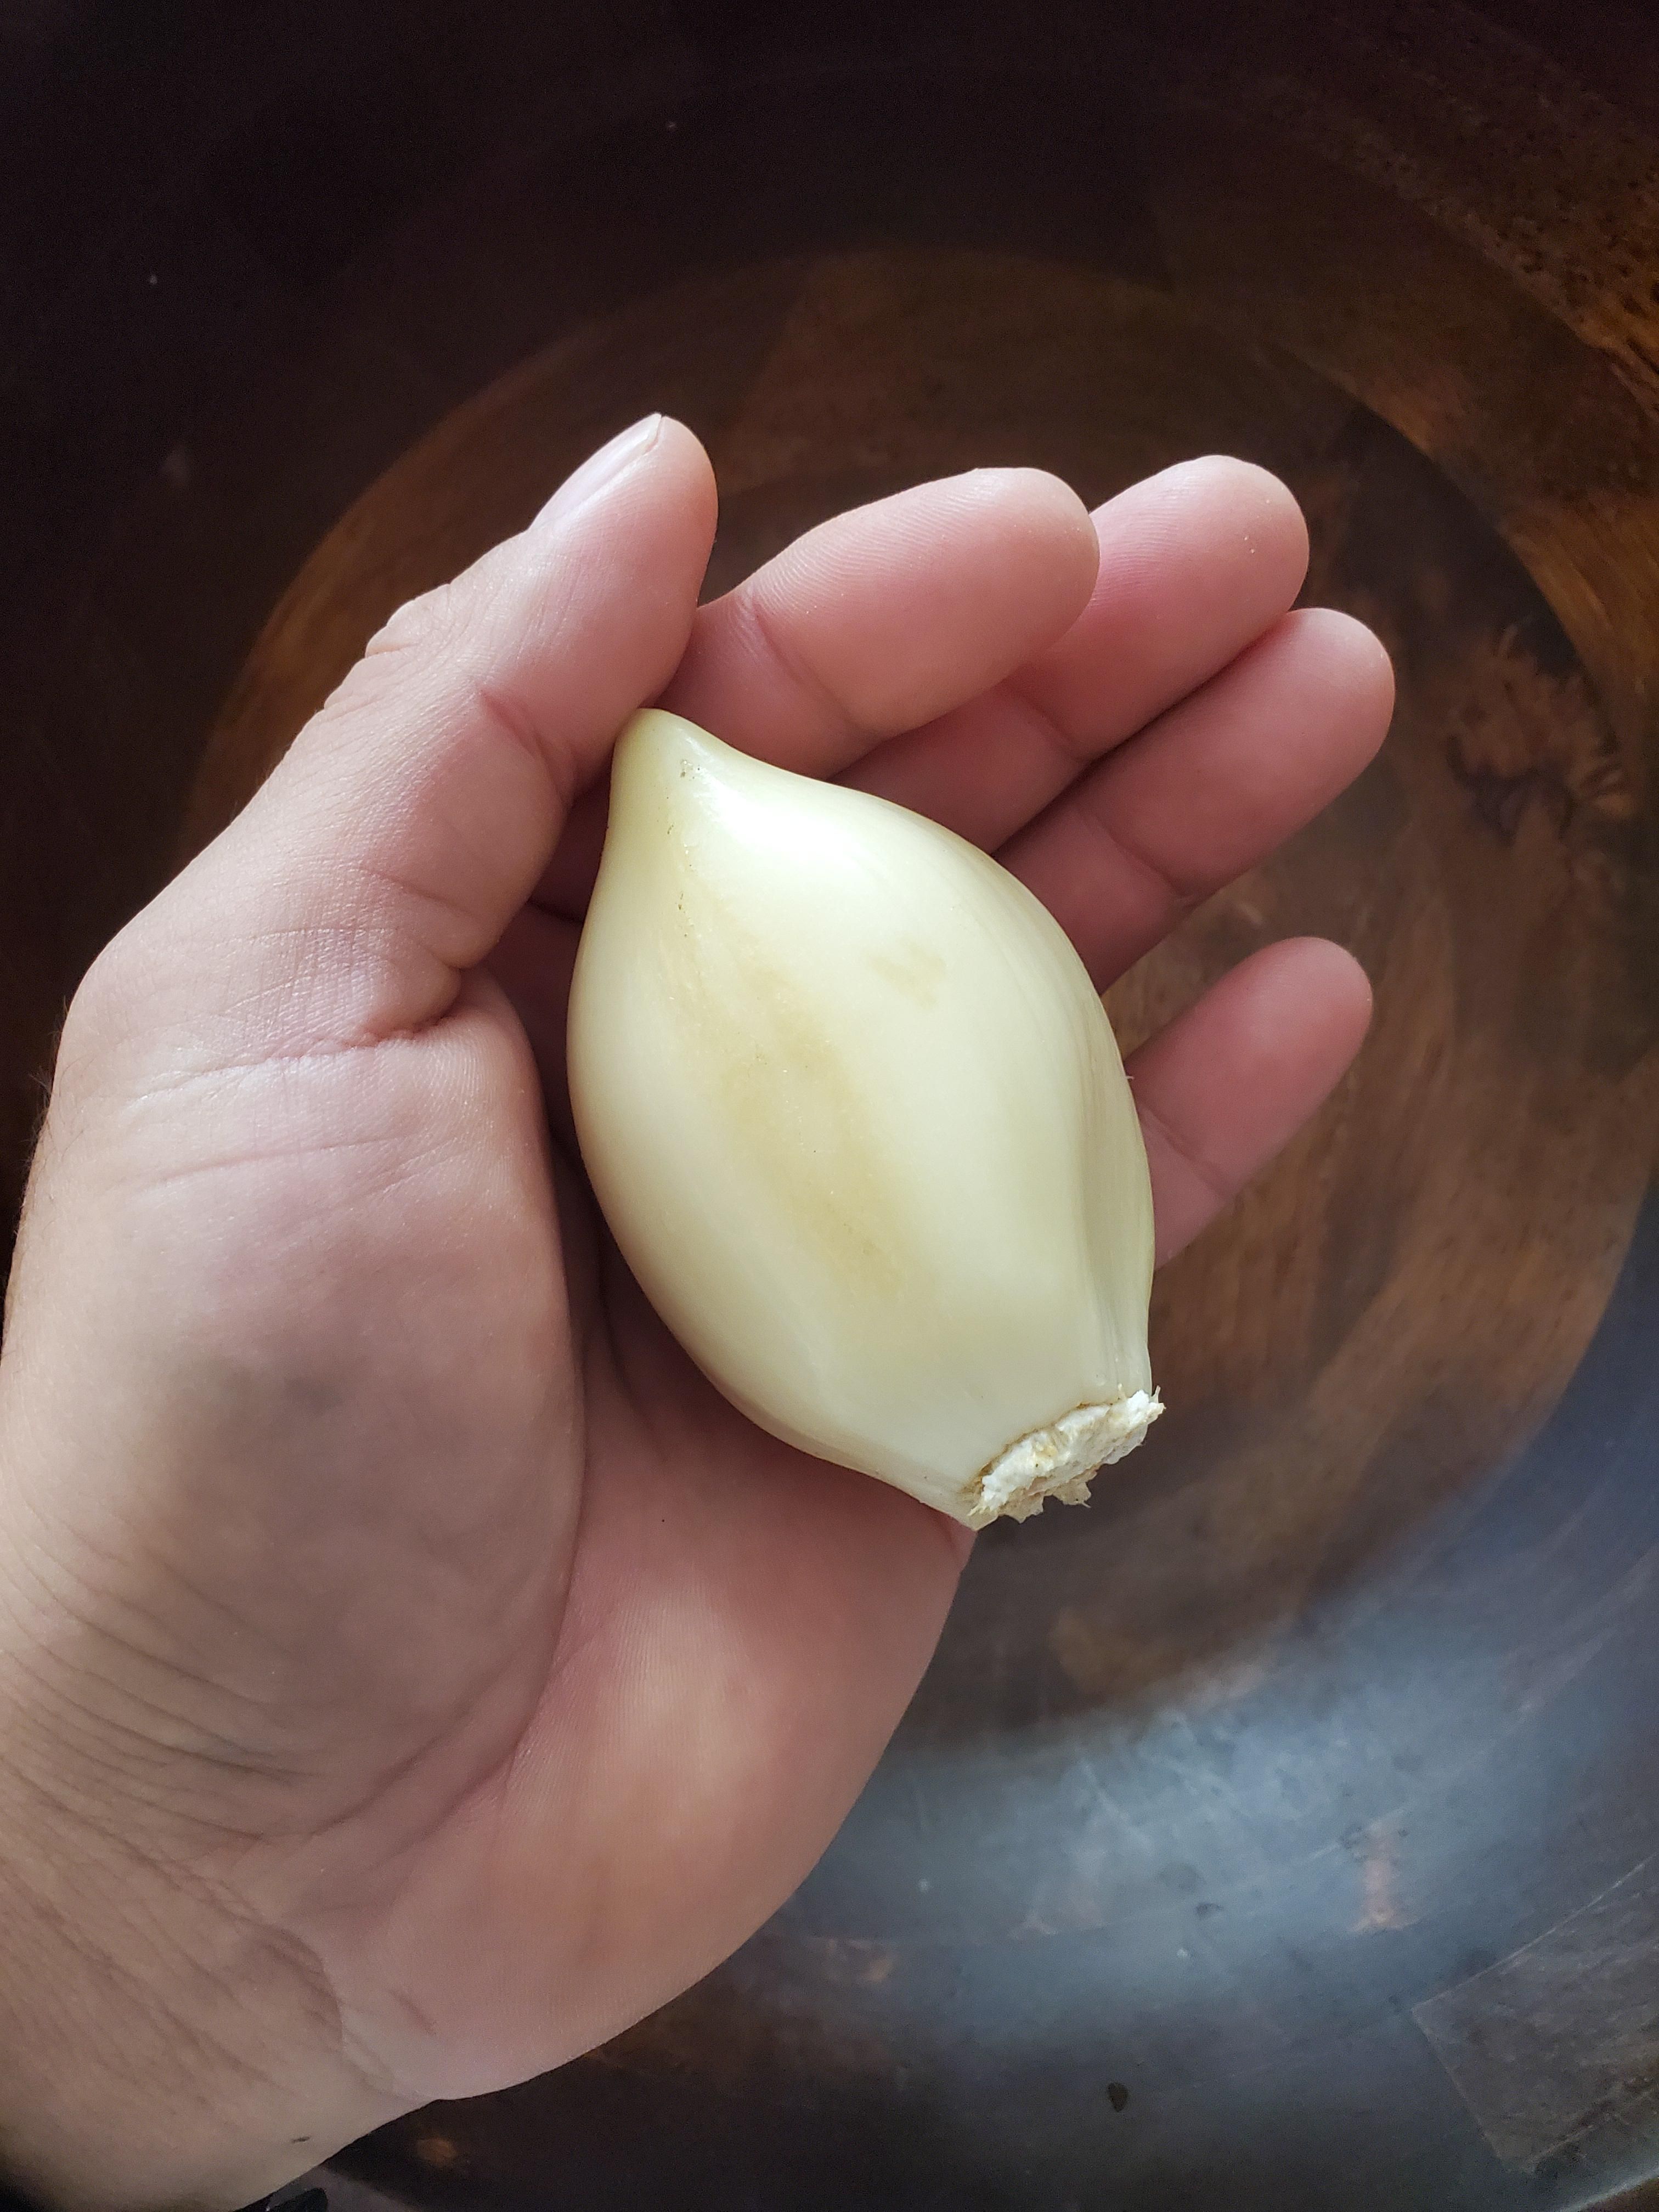 Recipe calls for one garlic clove.